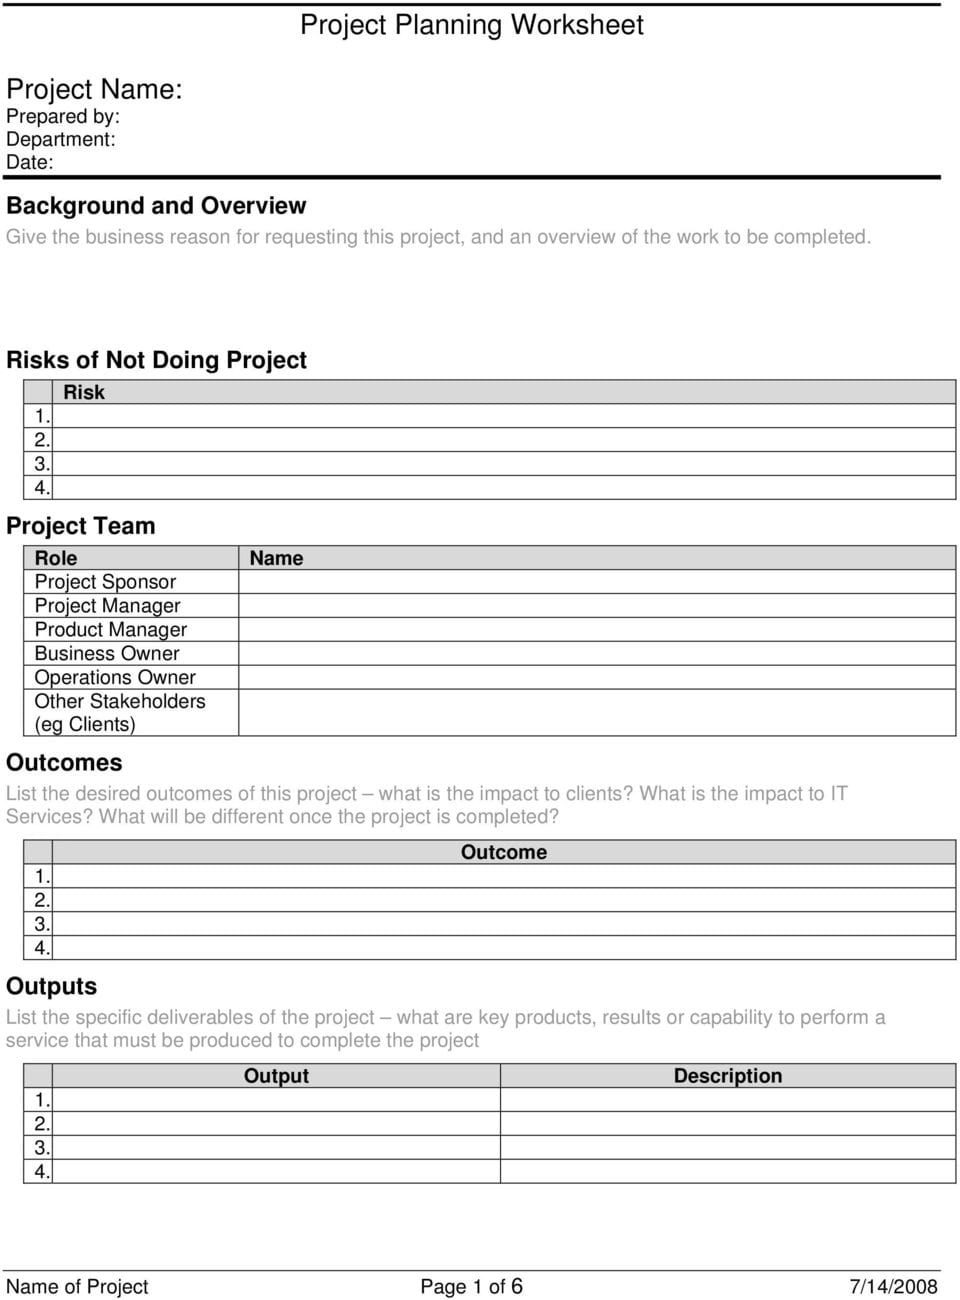 printable-project-management-worksheets